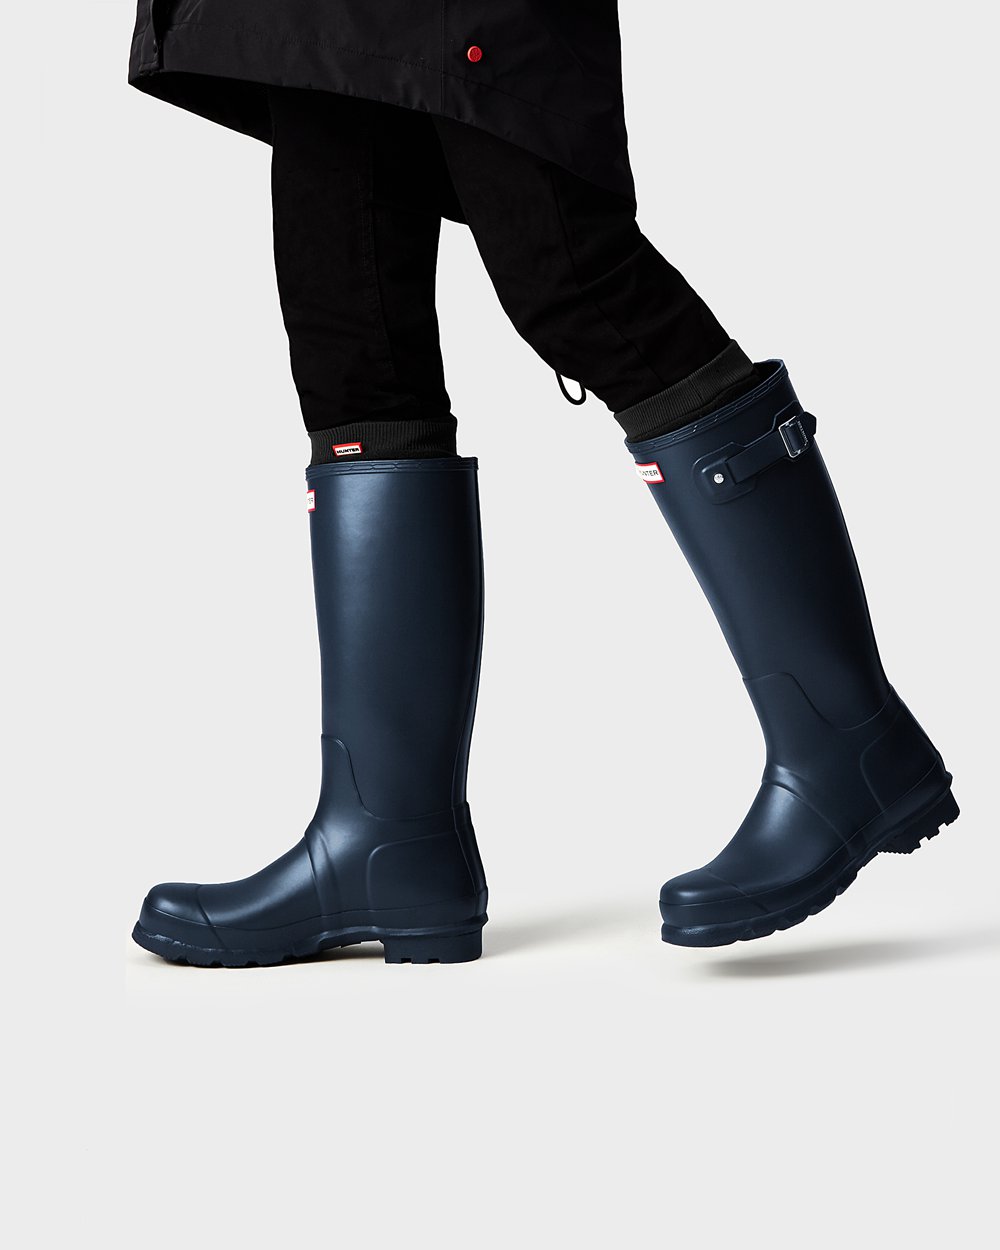 Mens Tall Rain Boots - Hunter Original (65XJZNYHA) - Navy